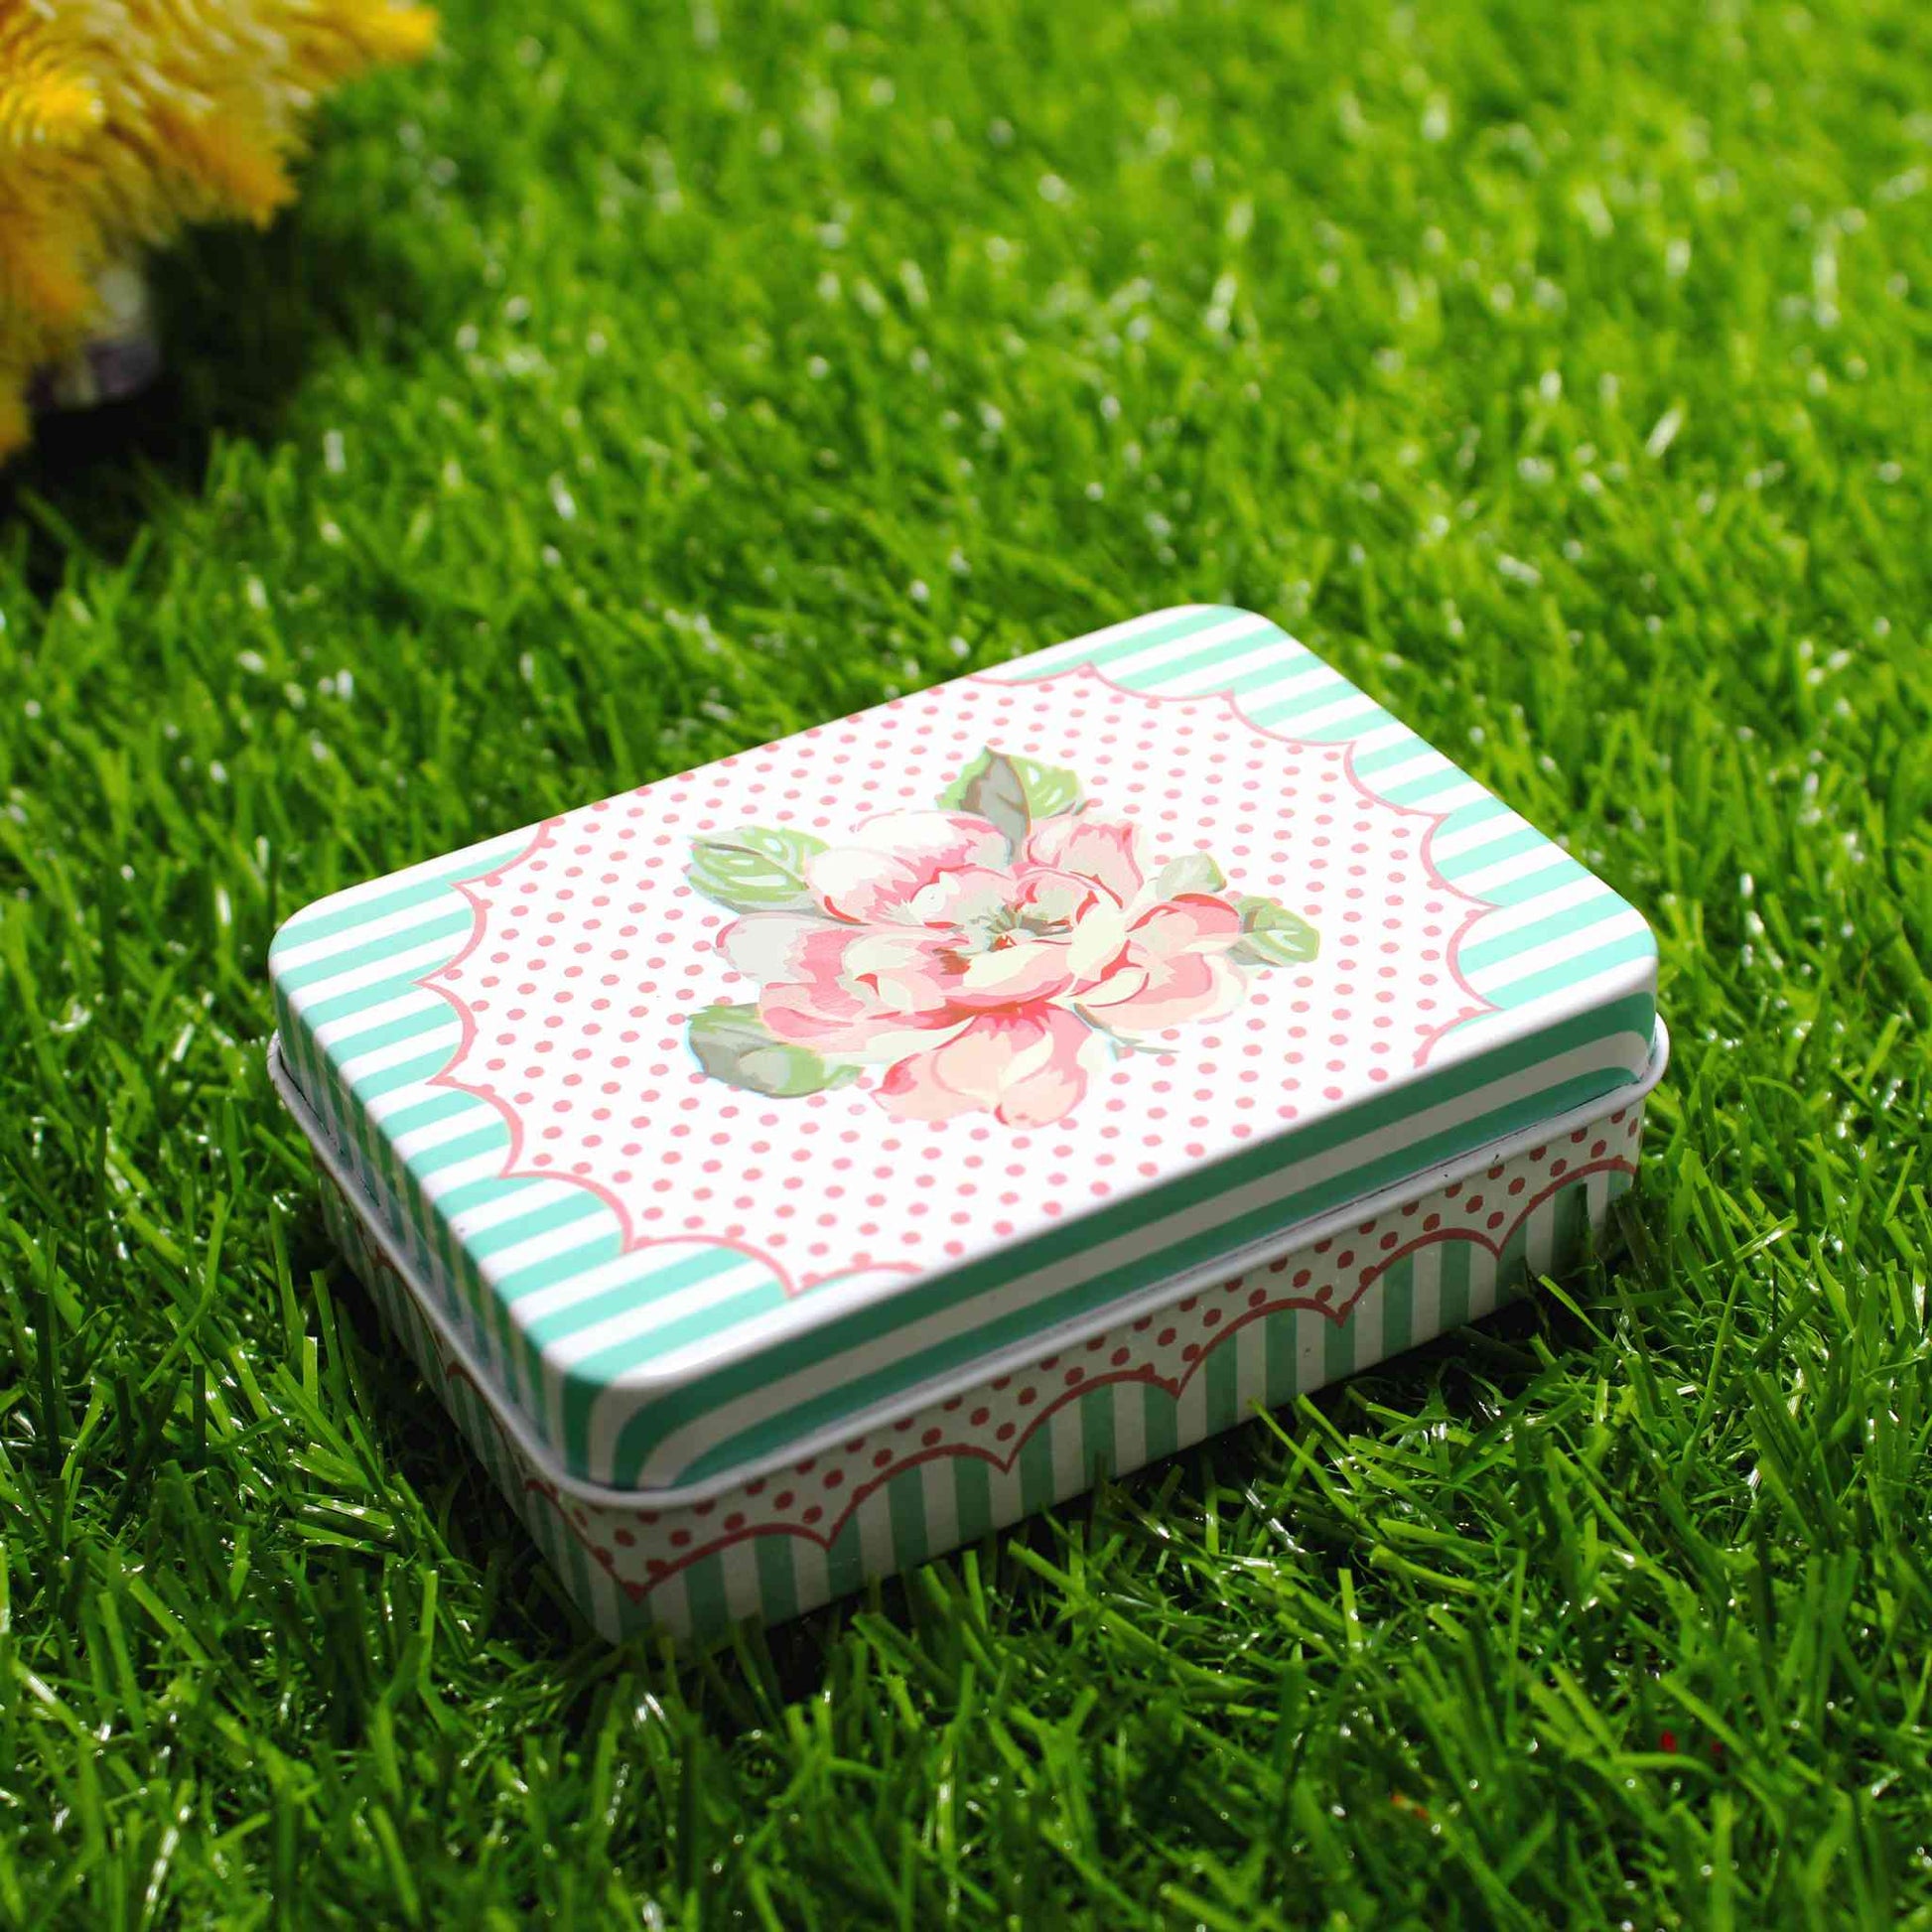 Indian Petals Beautiful Printed Aluminium Pocket Storage Box by Indian Petals, Large